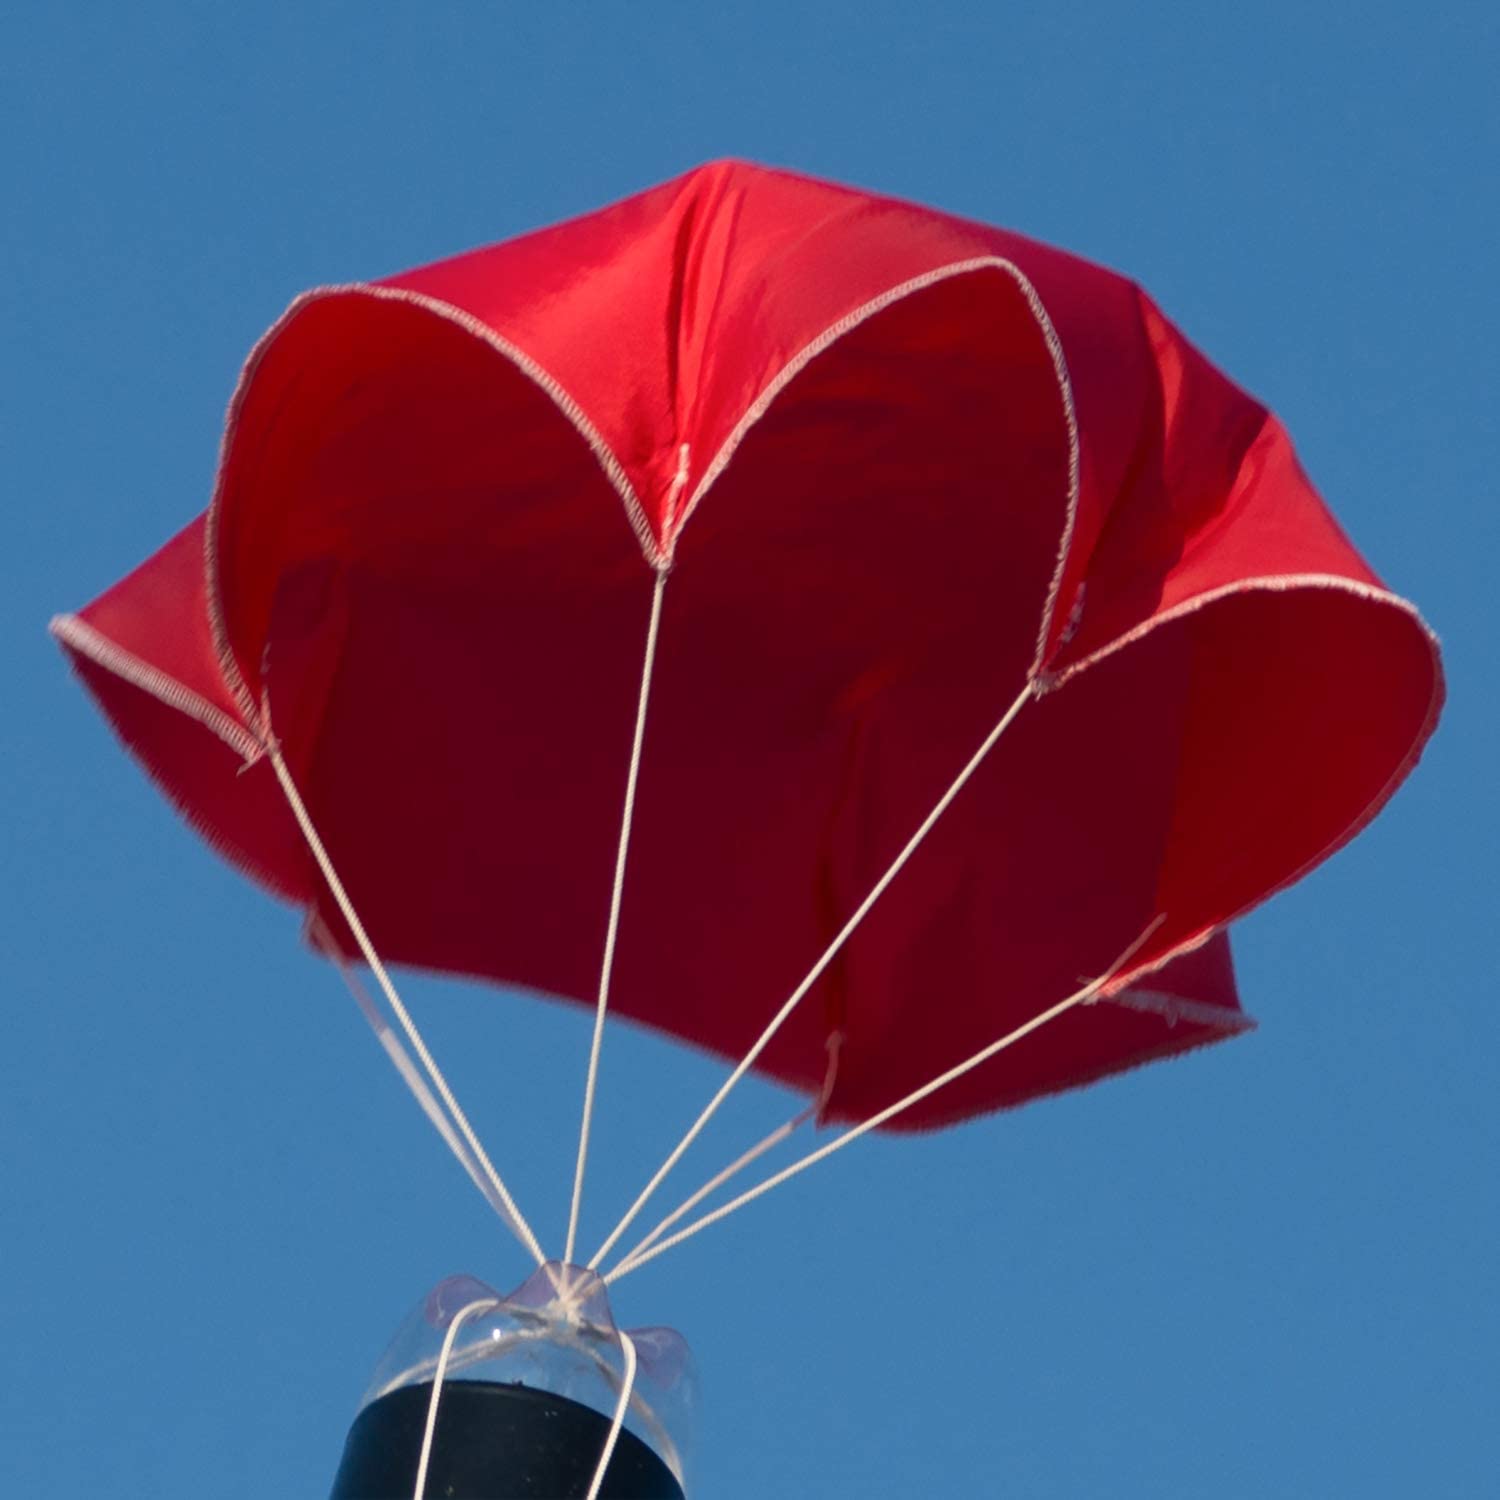 trip to parachute|parachuting travel planner app